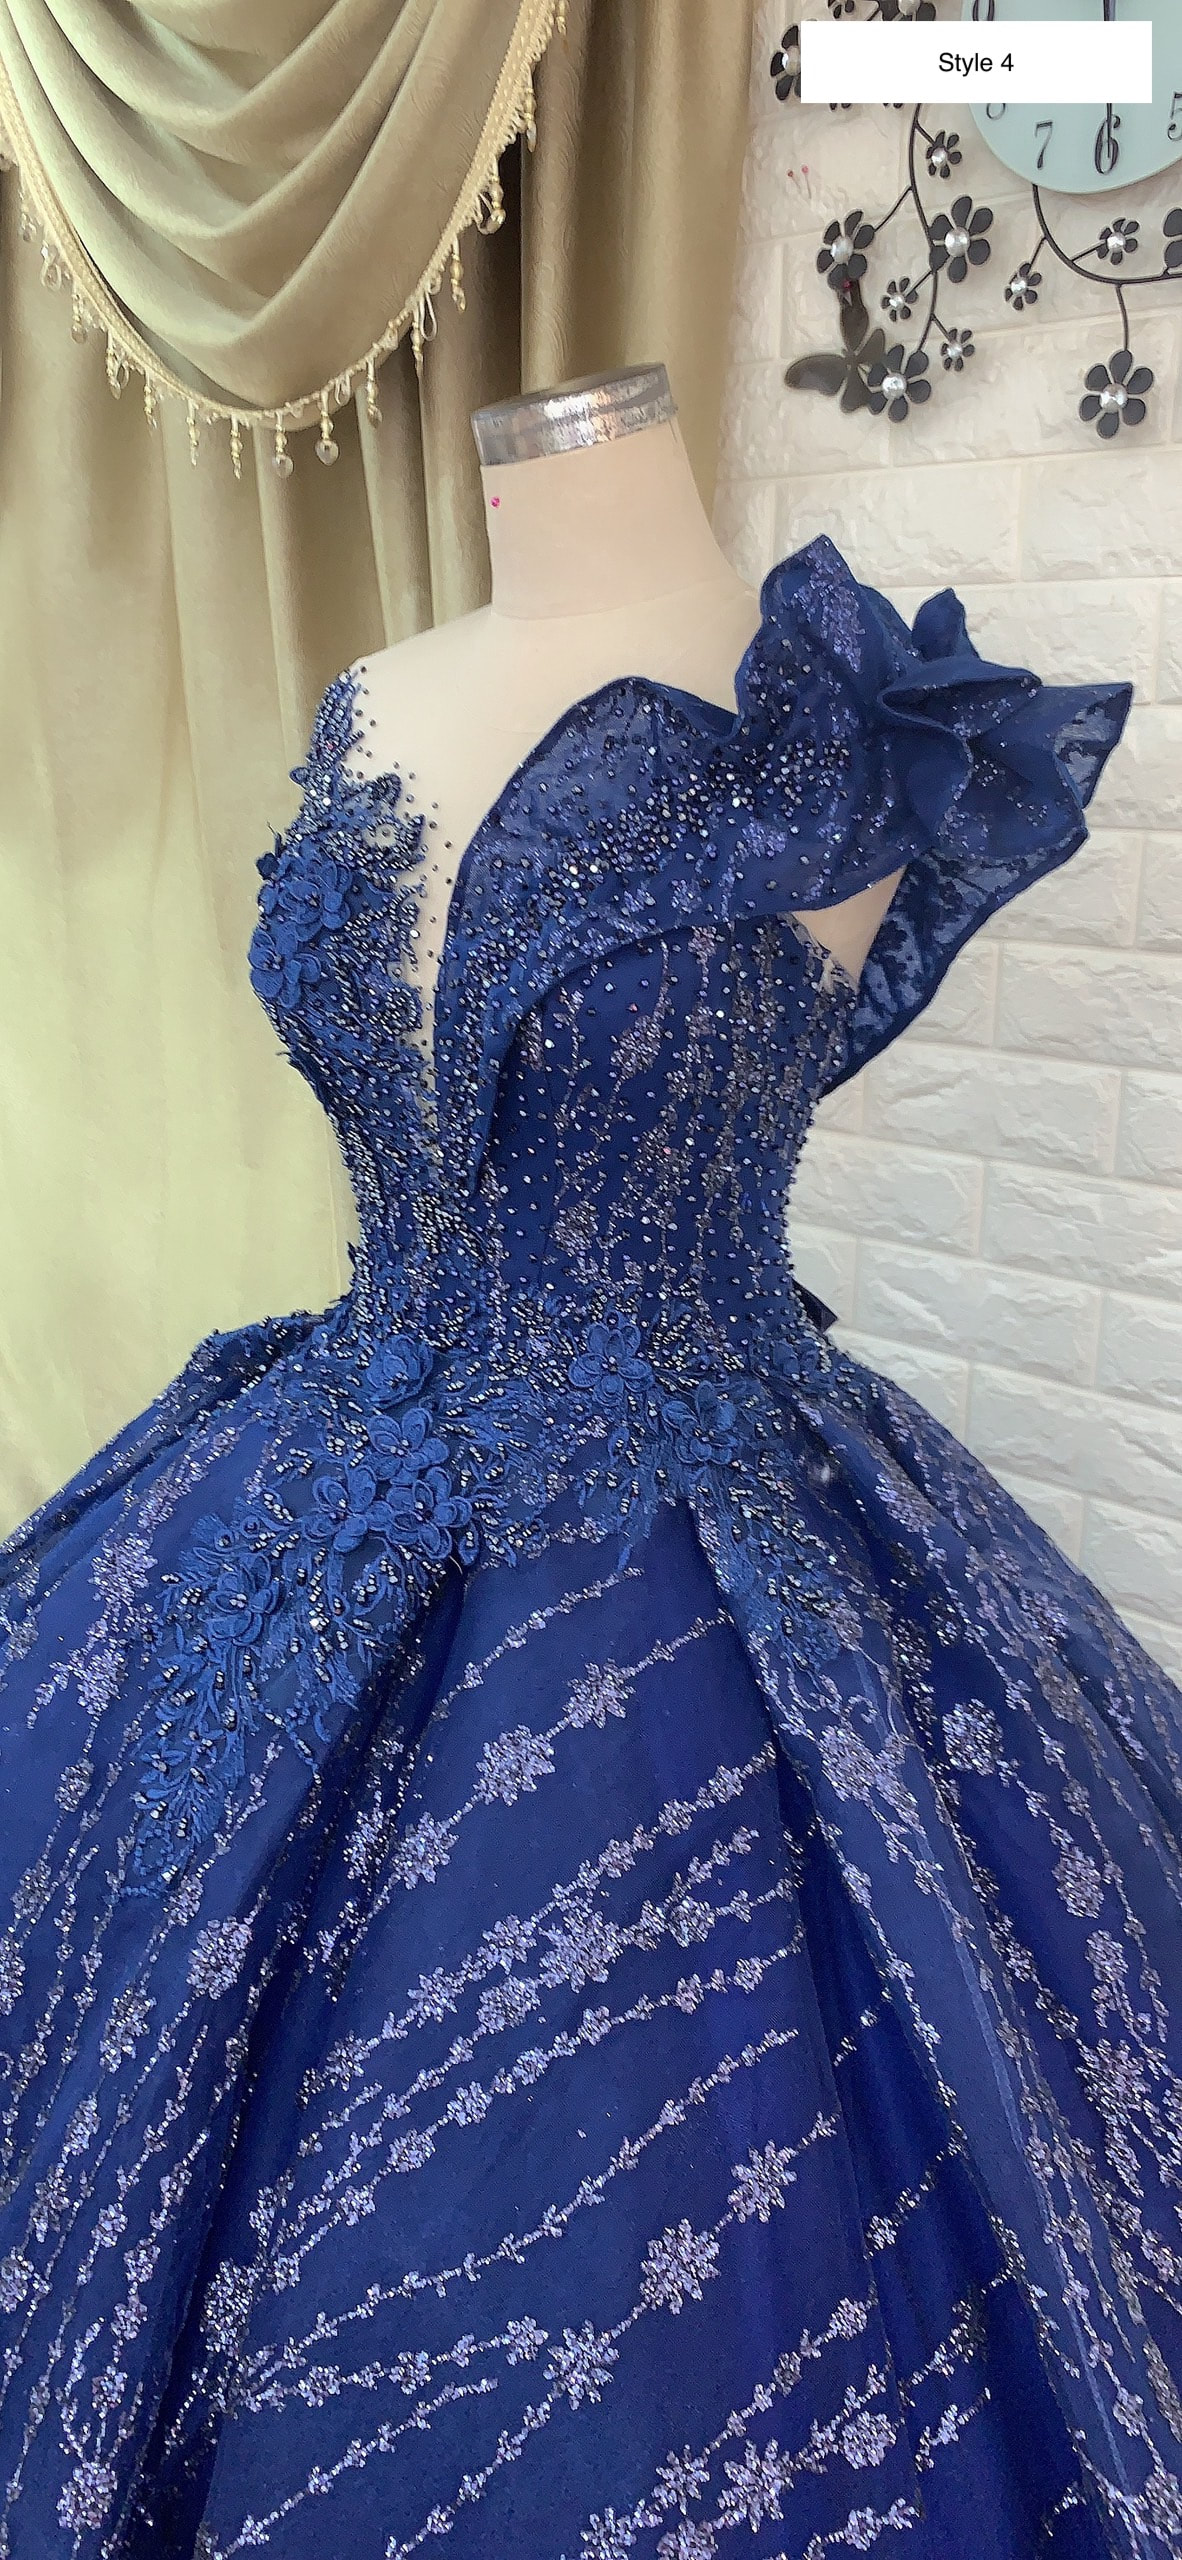 cinderellamoment #debut #debutgown #royalbluegown #debutideas #makeup  #elegantdebut | Debut gowns, Royal blue gown, Prom dresses